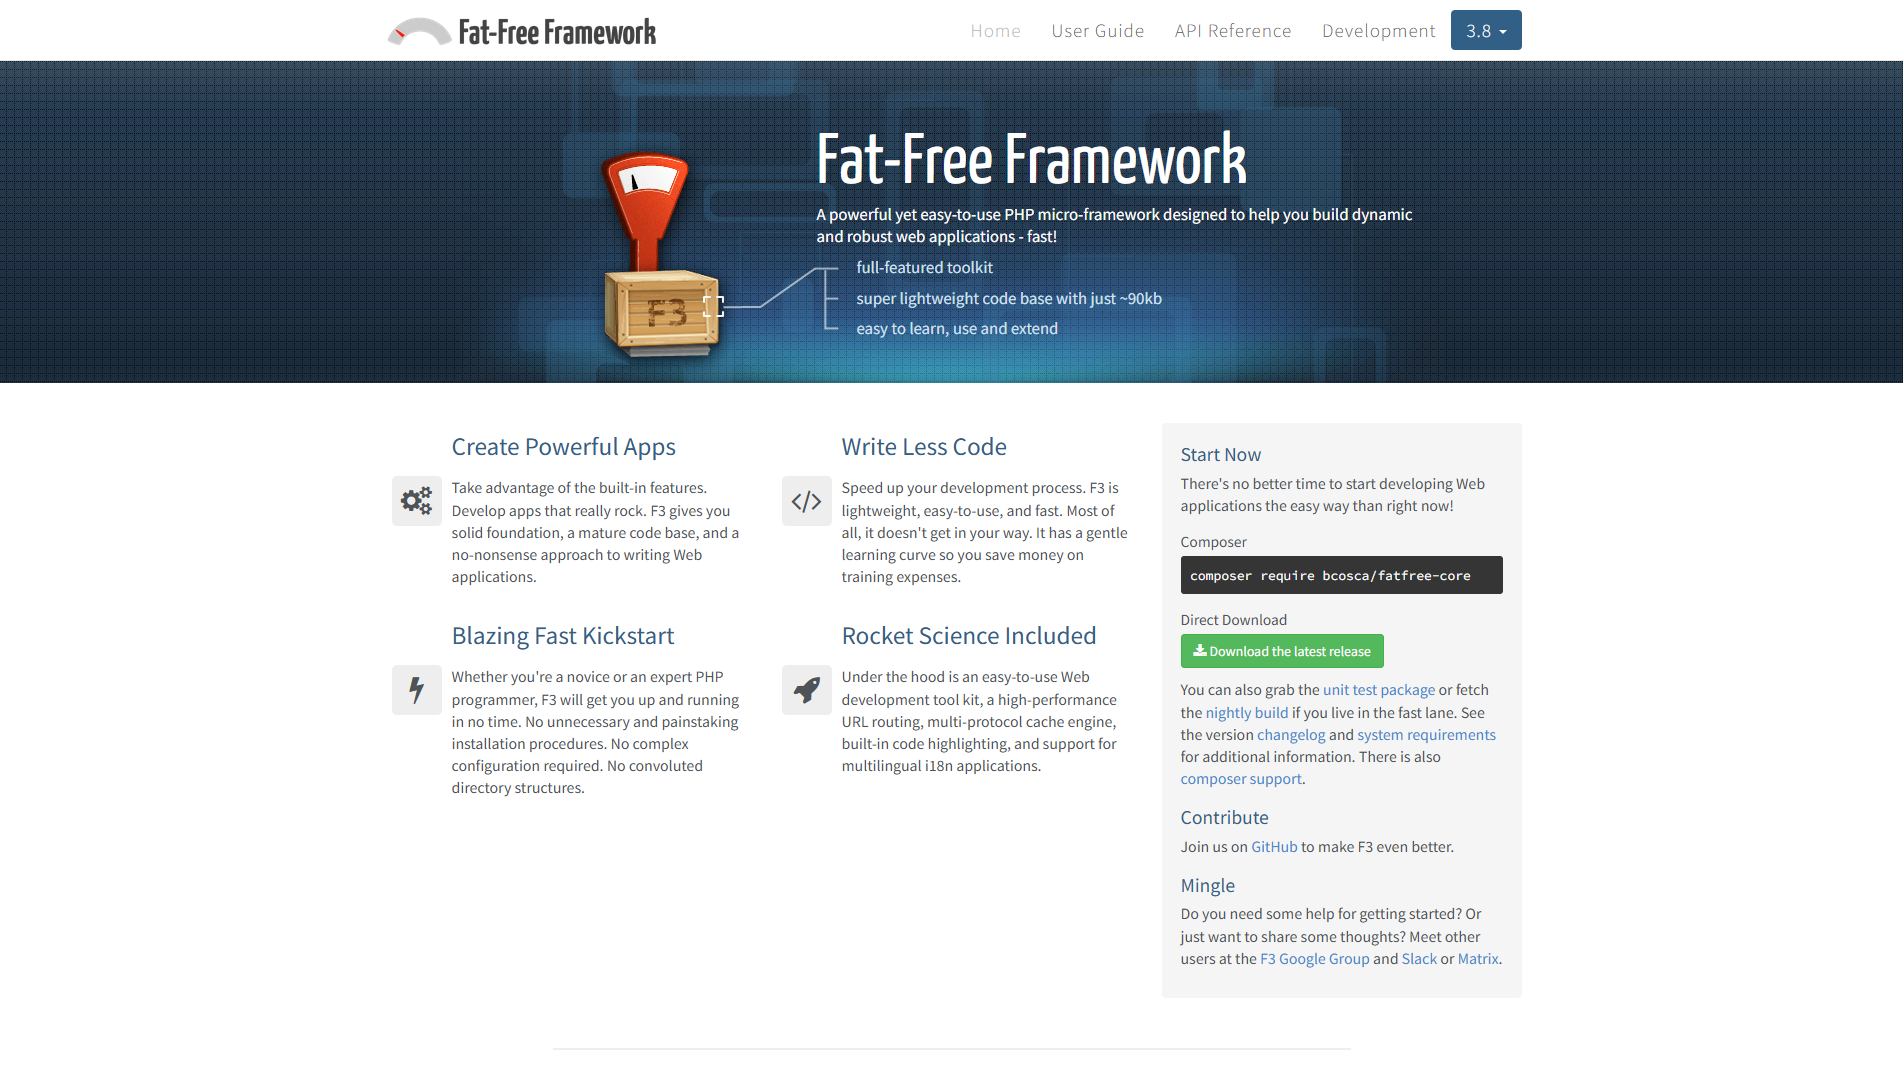 Fat-free framework